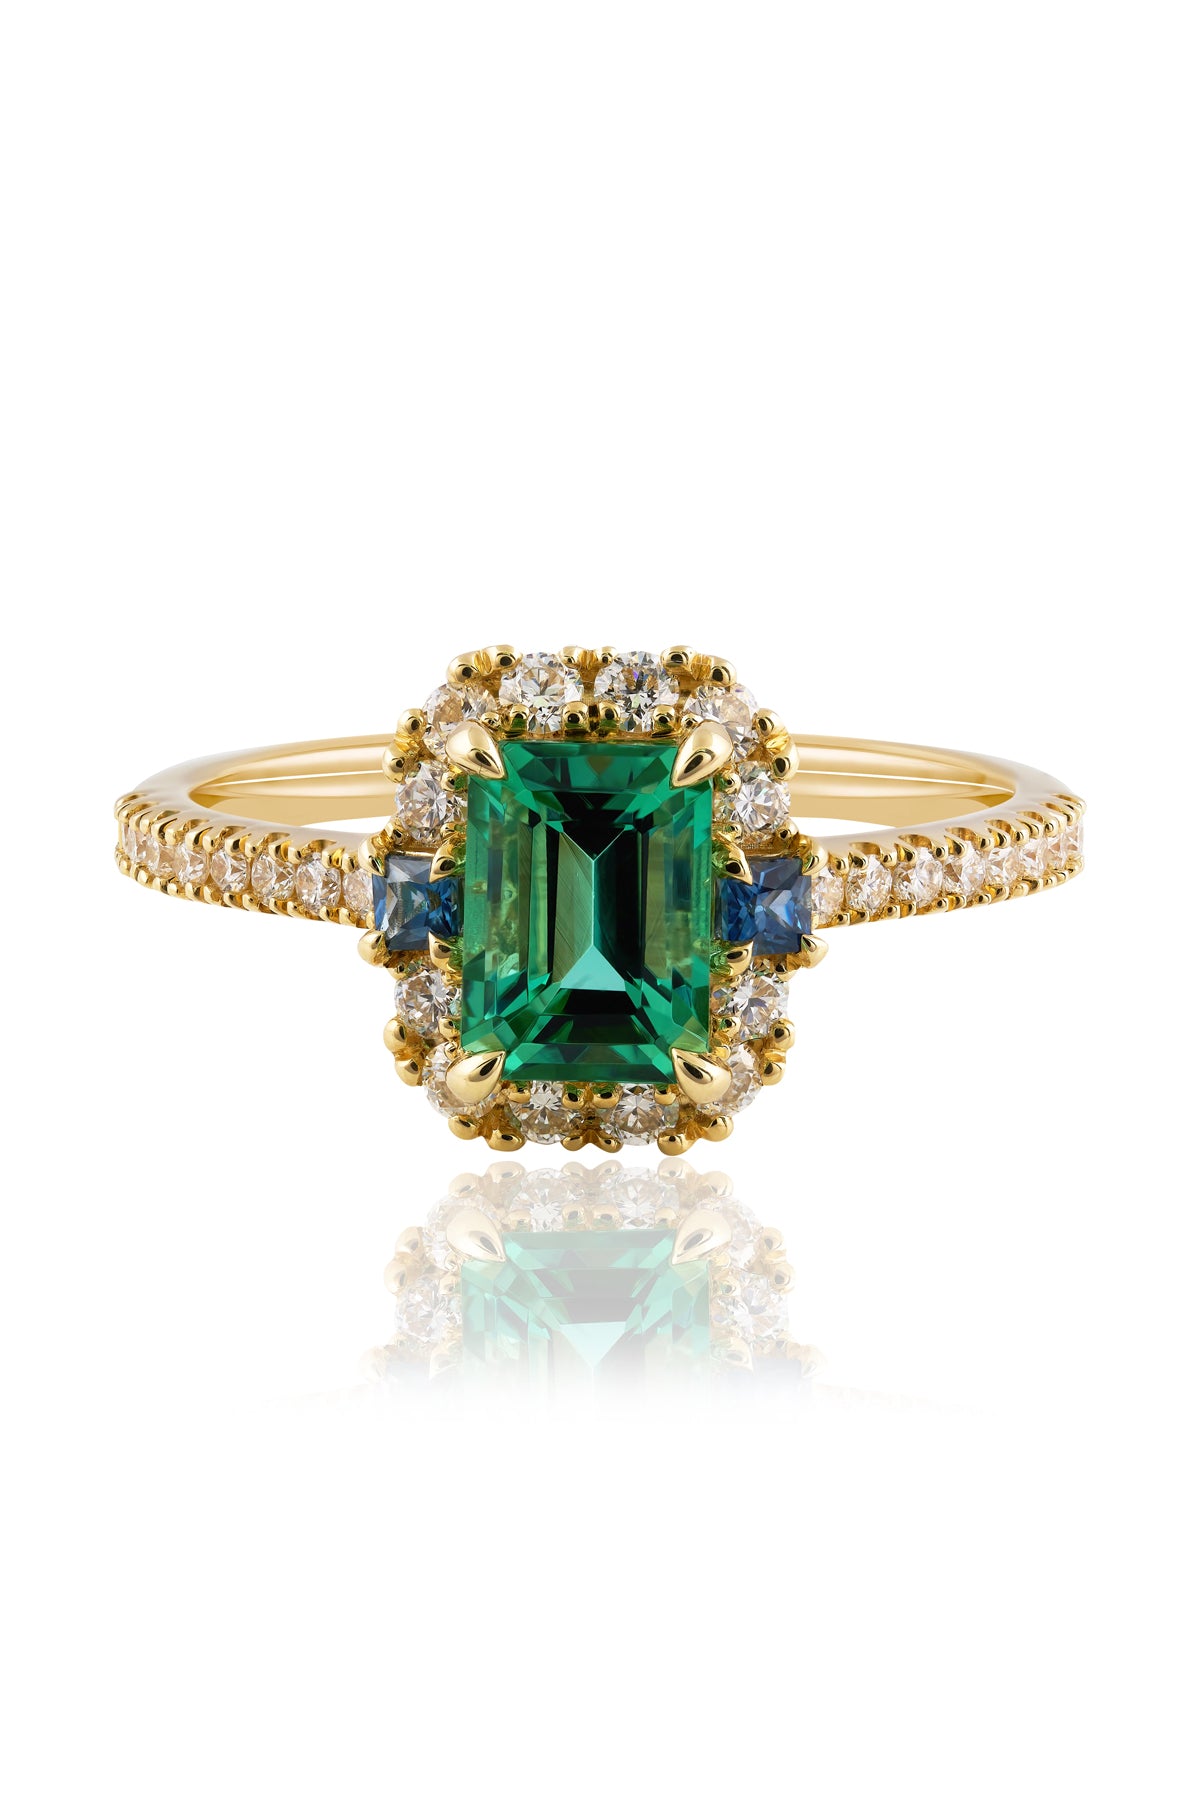 Mint Tourmaline Ring With Ceylon Sapphires & Diamonds from LeGassick Jewellery.